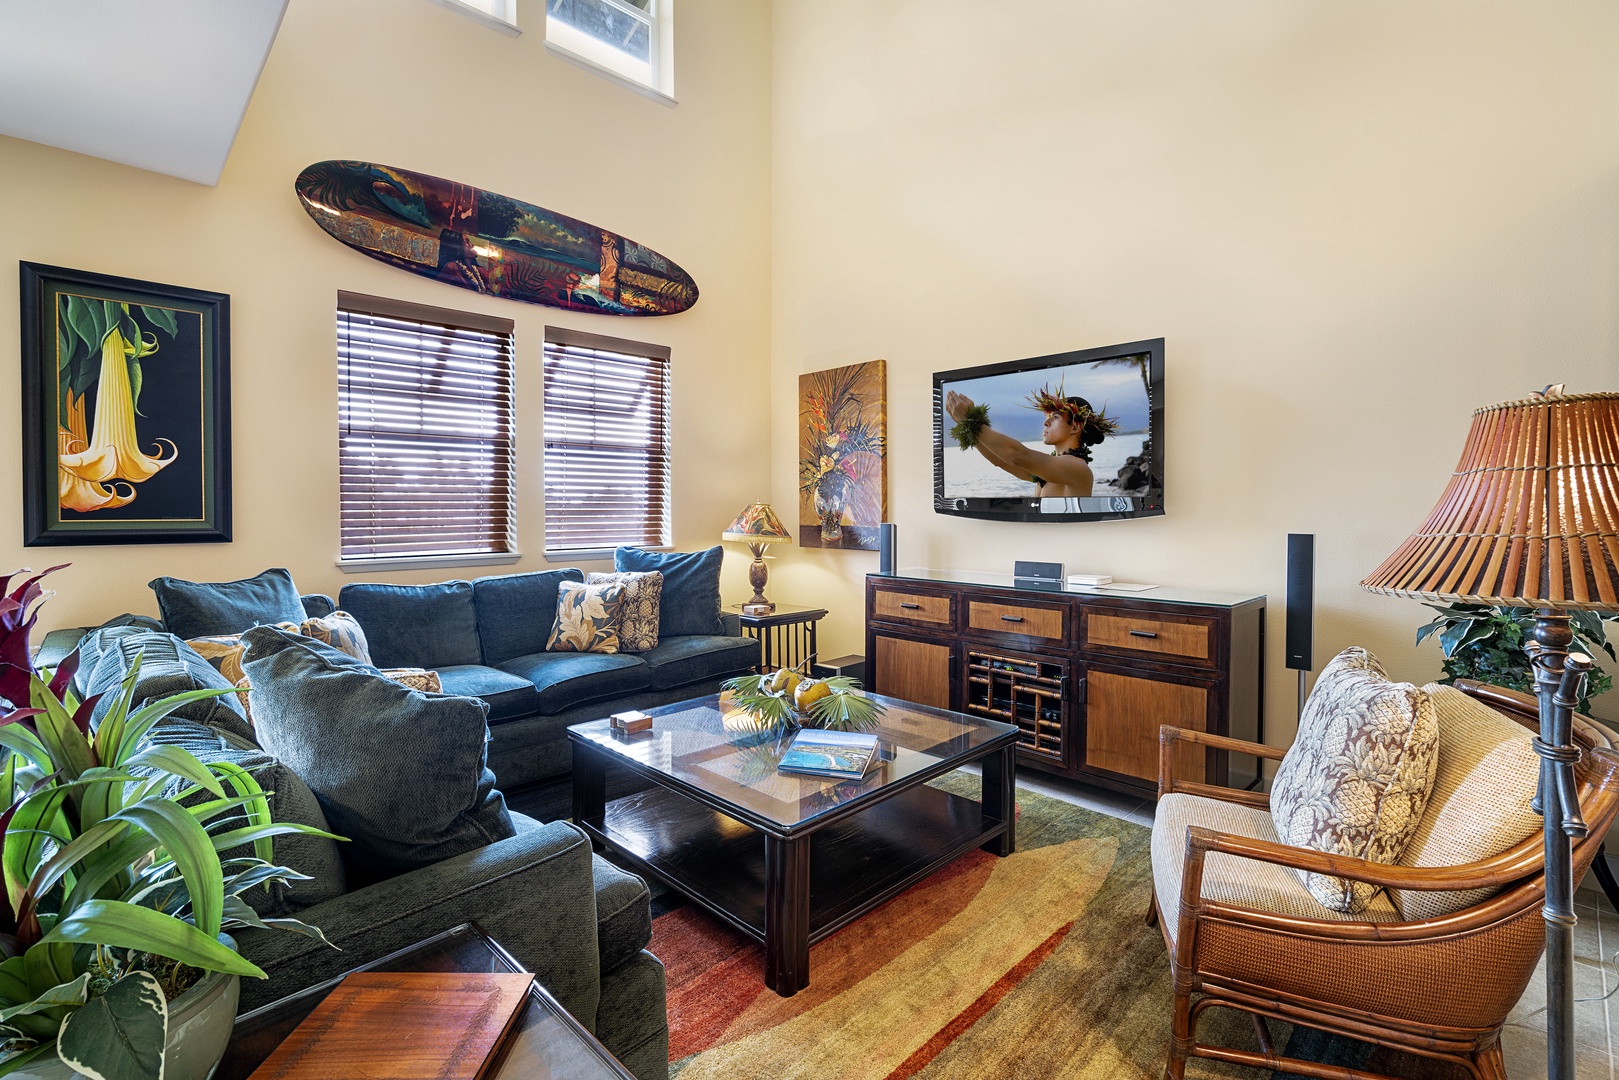 Waikoloa Vacation Rentals, Hali'i Kai at Waikoloa Beach Resort 9F - Beautifully appointed living room with Central A/C